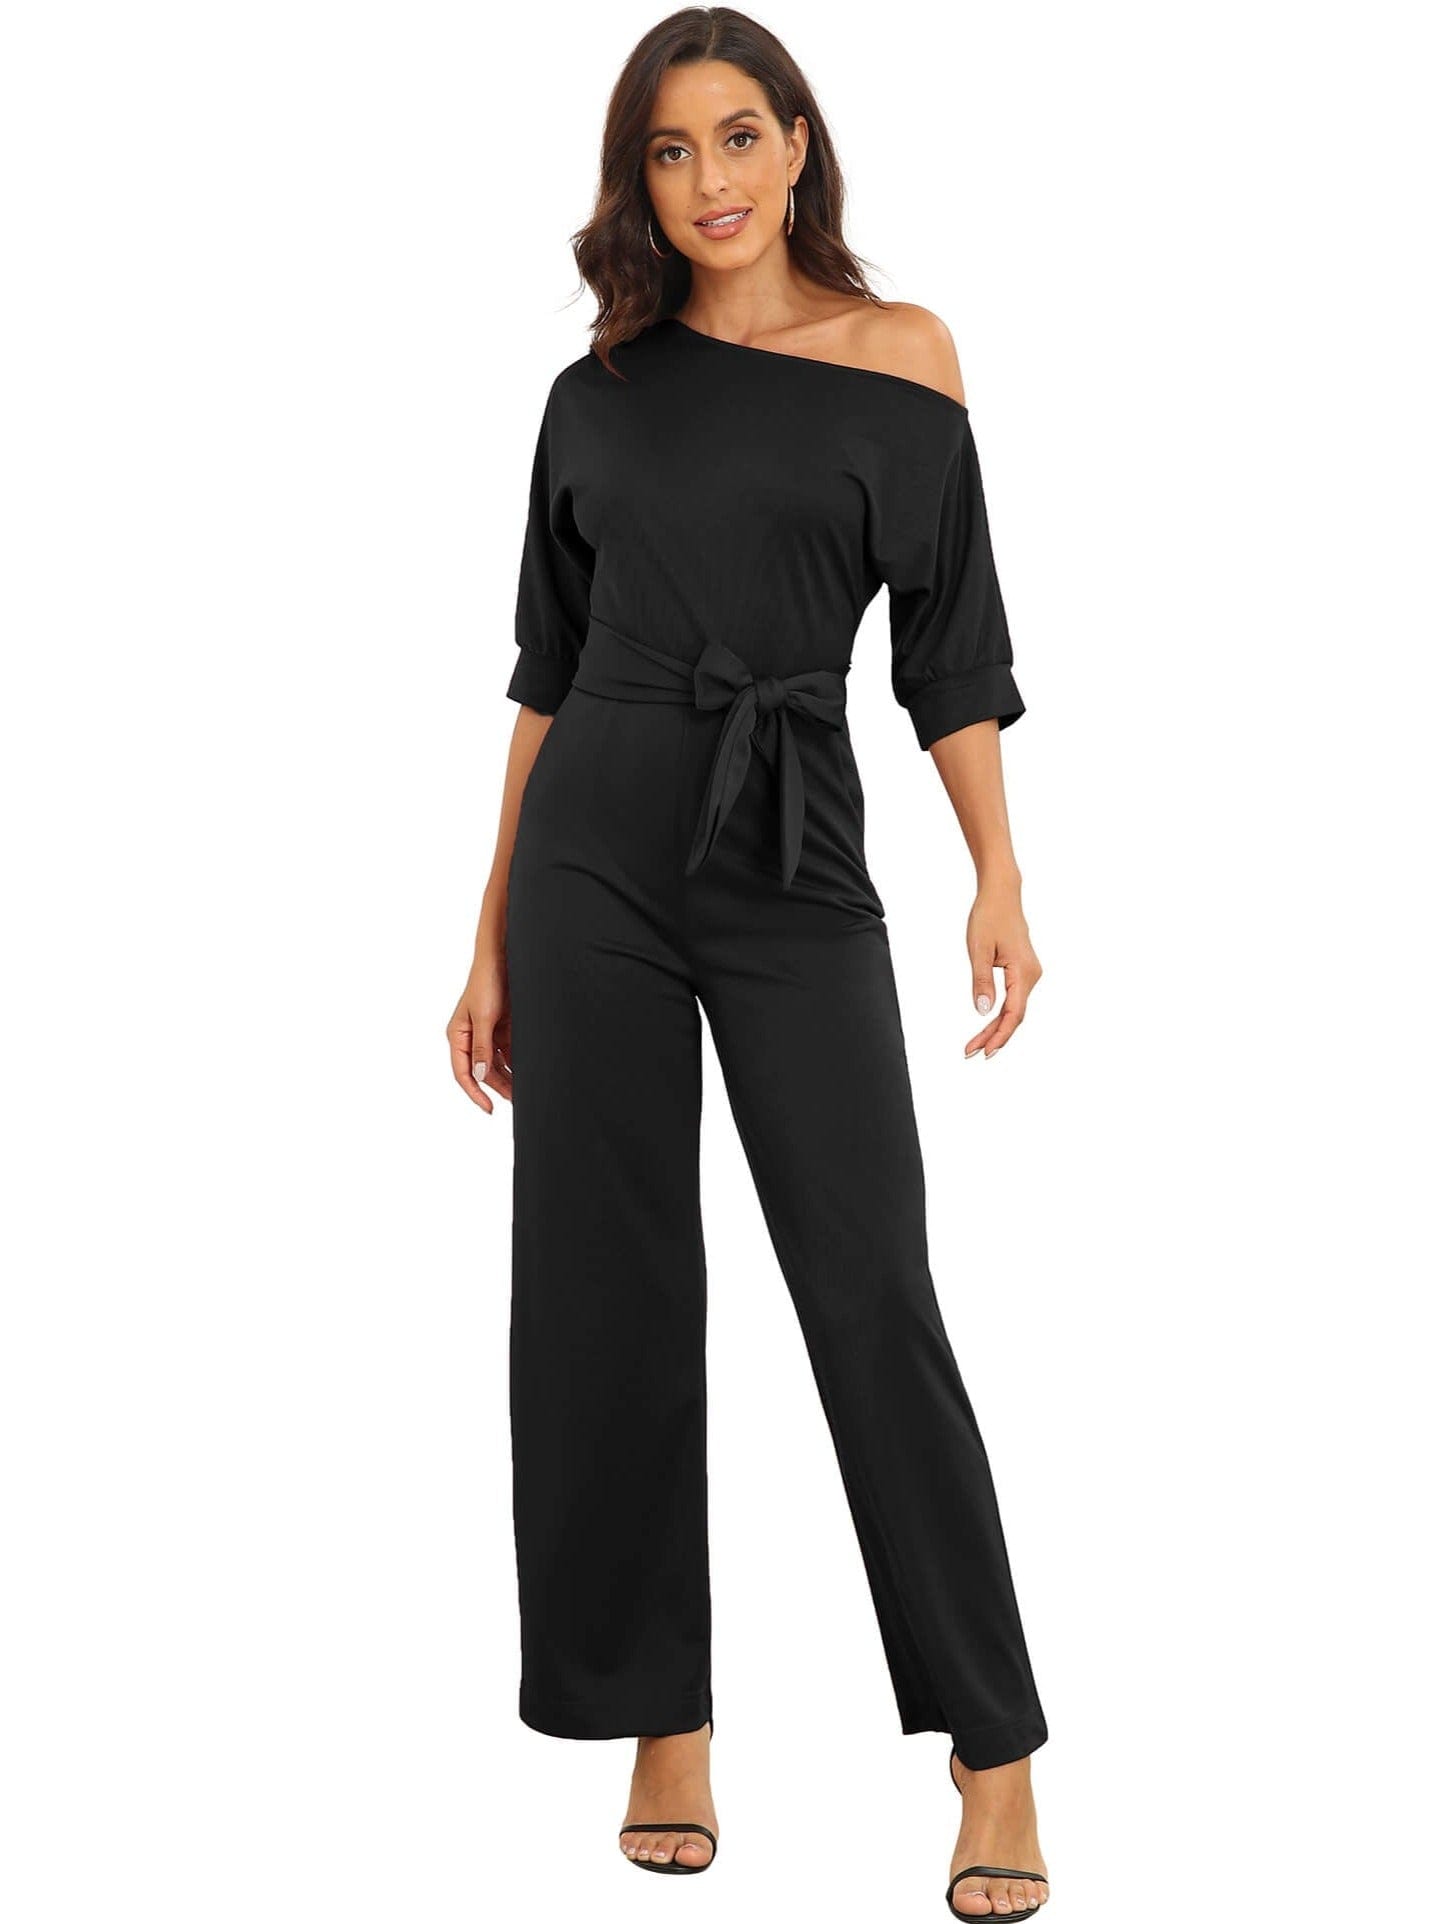 Dressy Jumpsuits for Women - Beige - Loose, Casual, Off-Shoulder, Wide Leg, Elastic Waist, Stretchy, 3/4 Sleeve JUM2210111822BLAS Black / 2 (S)